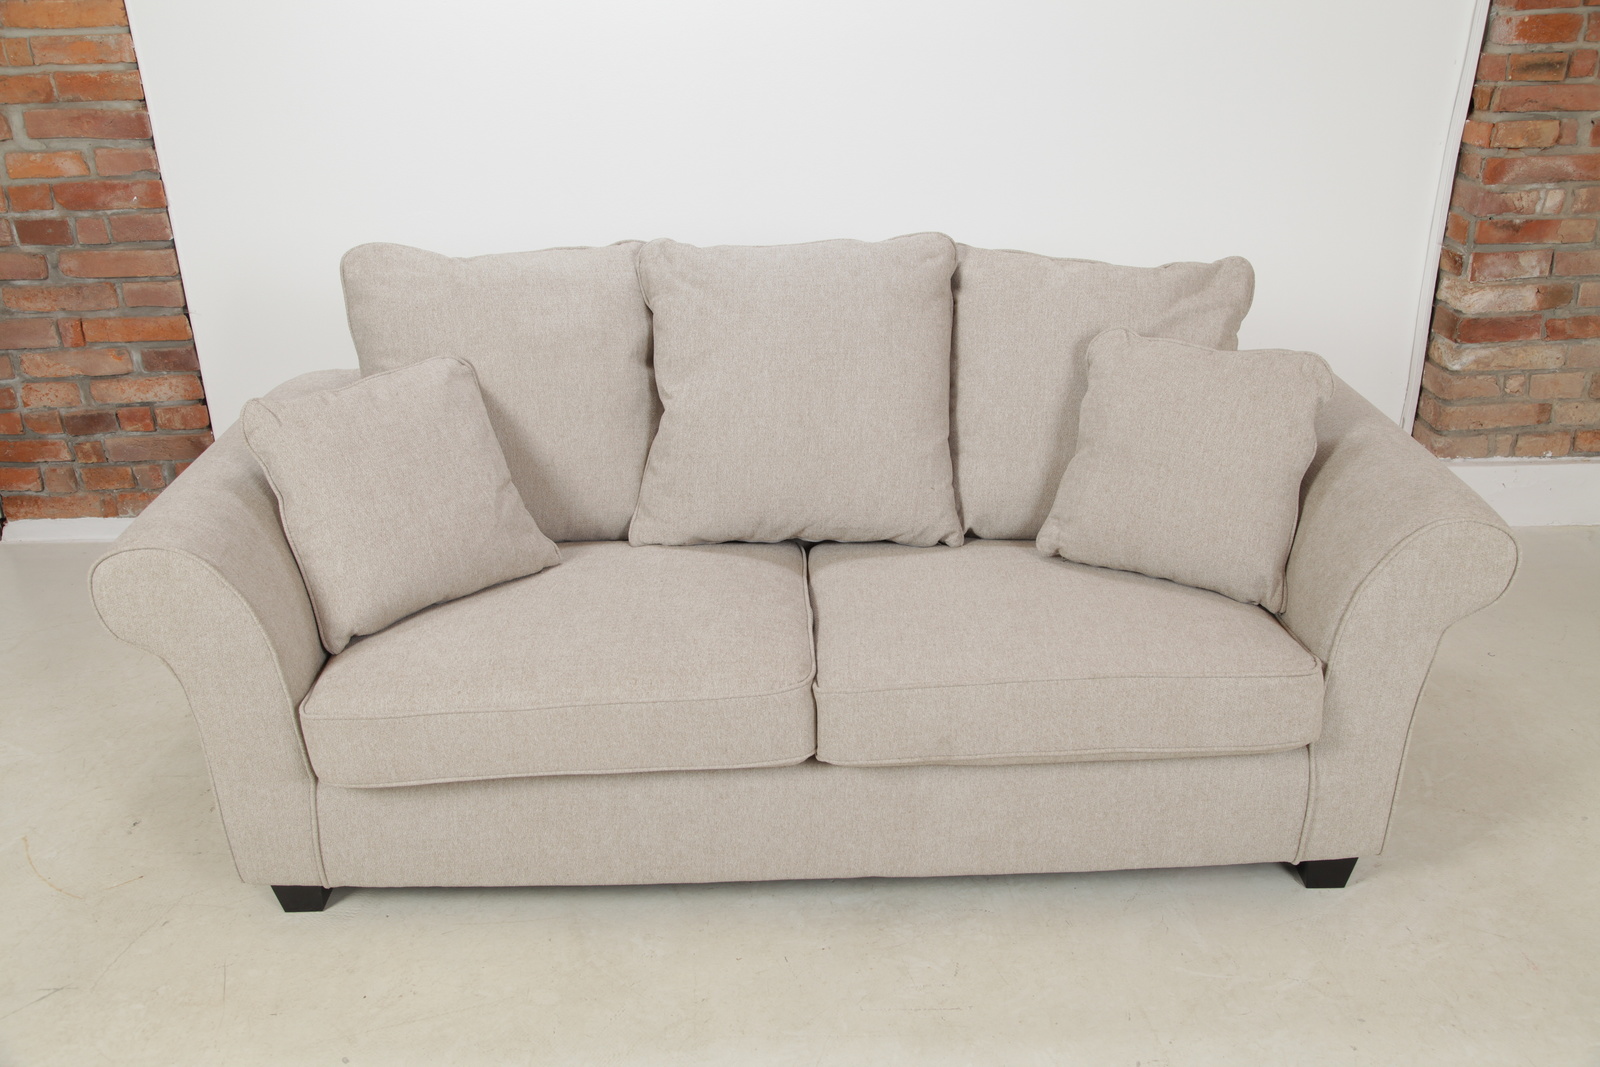 G53 fly bezova pohovka  sofa design pohovka  big sofa mega sedaci souprava  gutmann factorycanap%c3%a9 d'angle campagne i tissu abcnabytek.cz img 8807